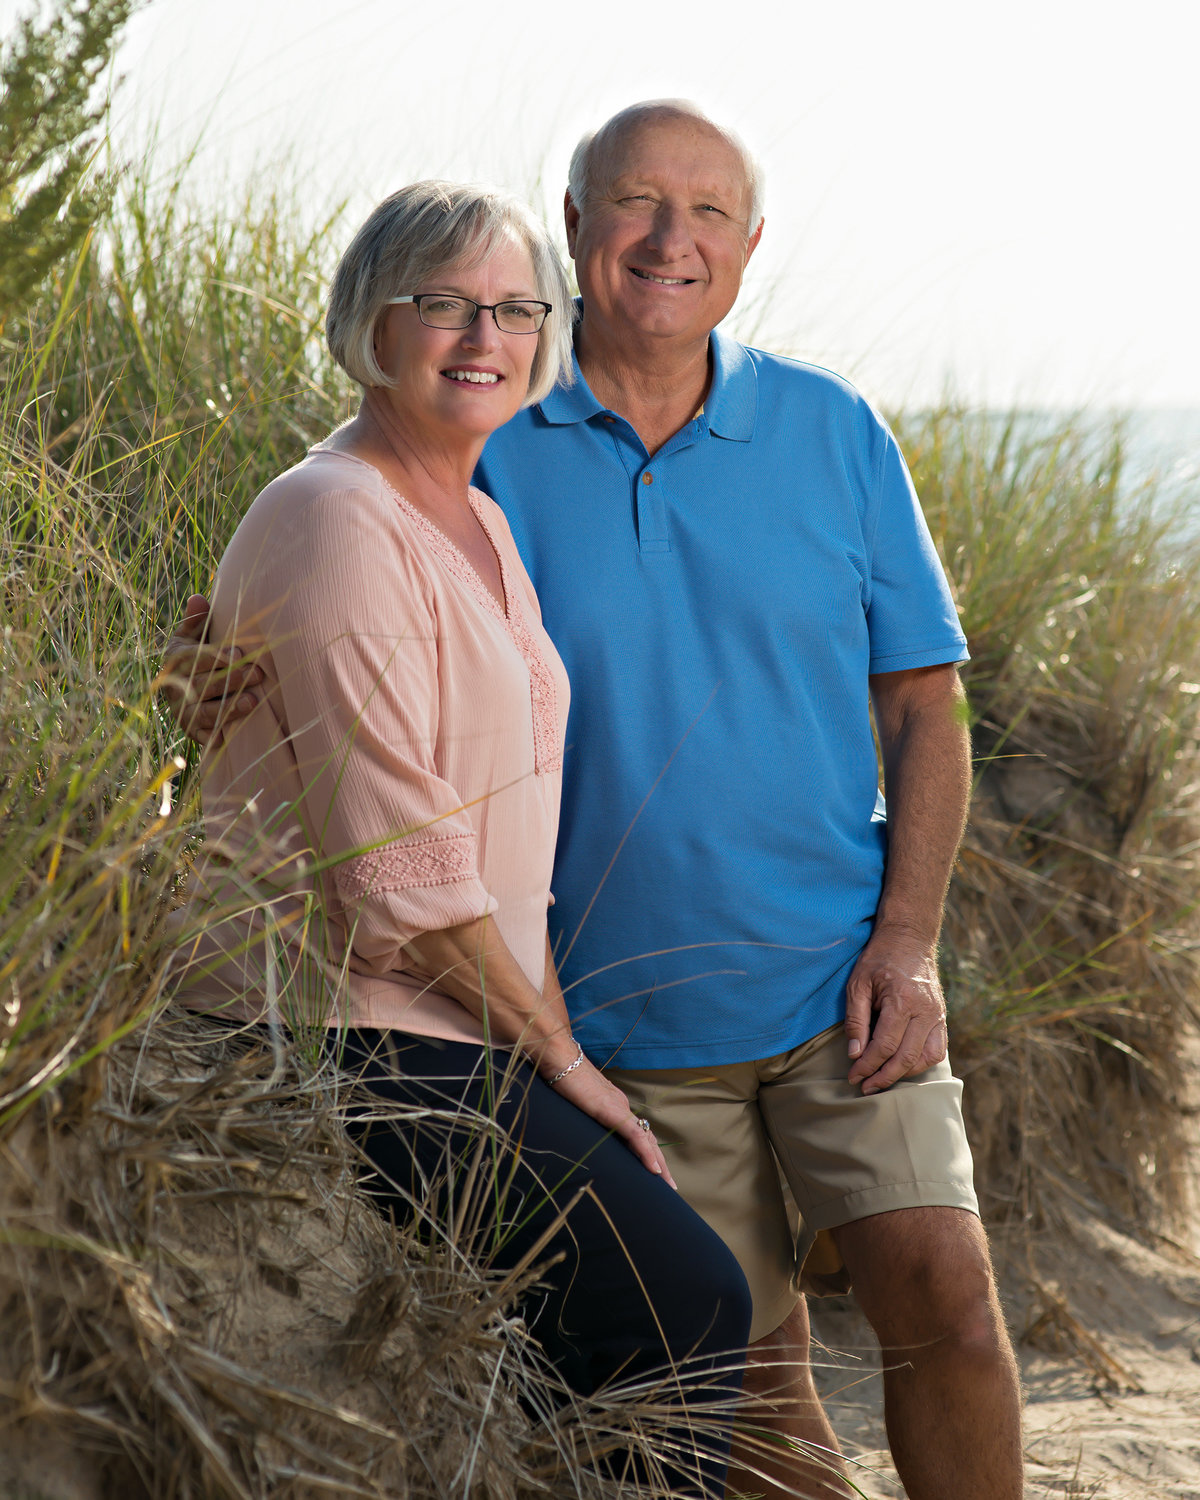 michigan family portrait photographs on the beach